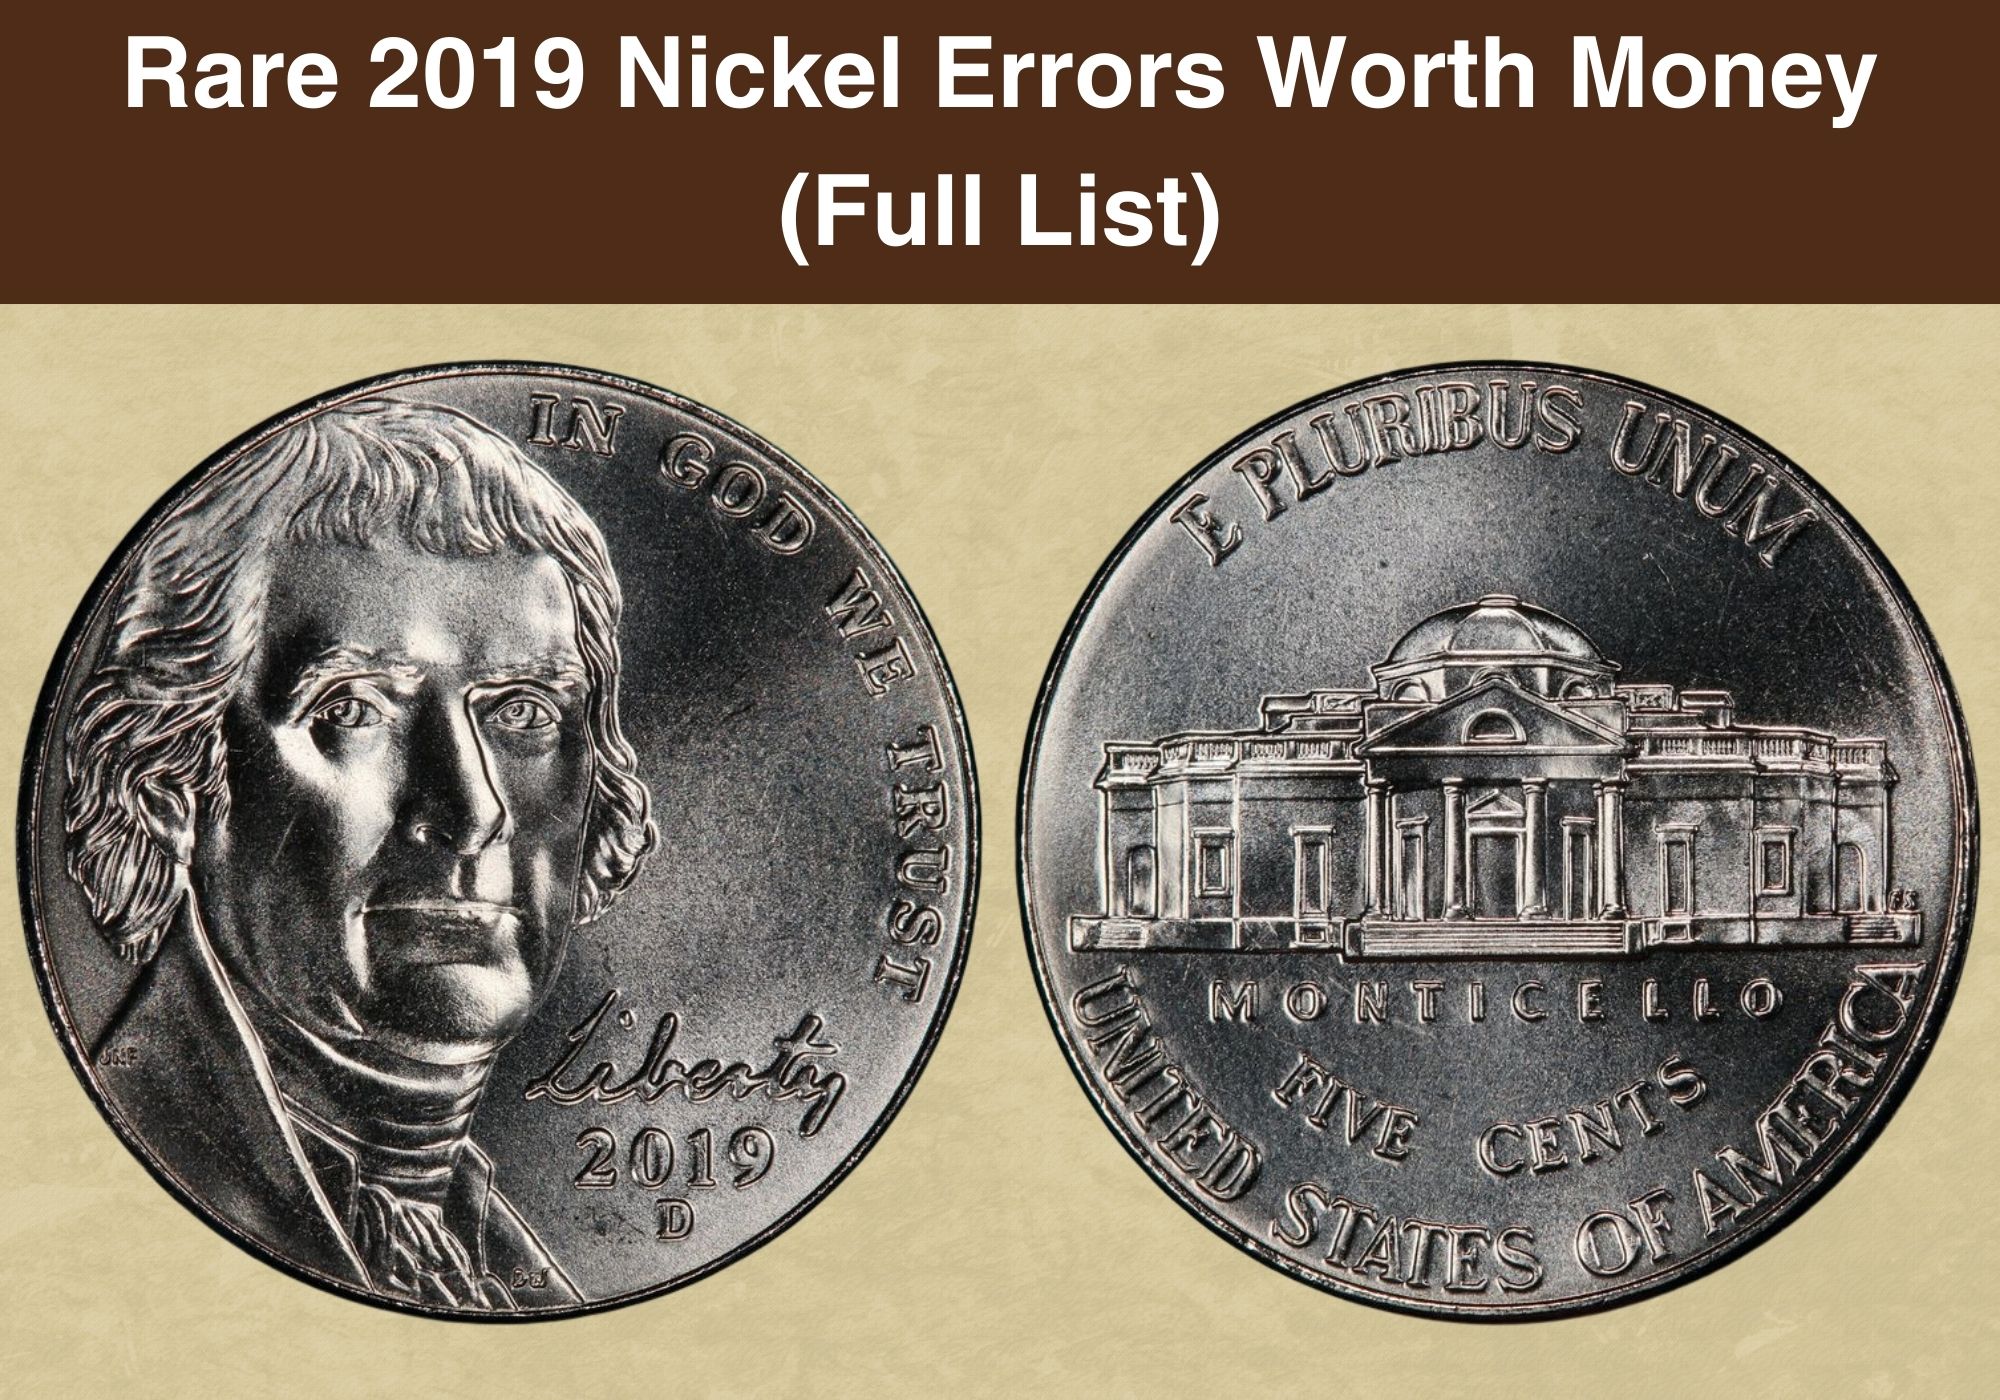 Rare 2019 Nickel Errors Worth Money (Full List)